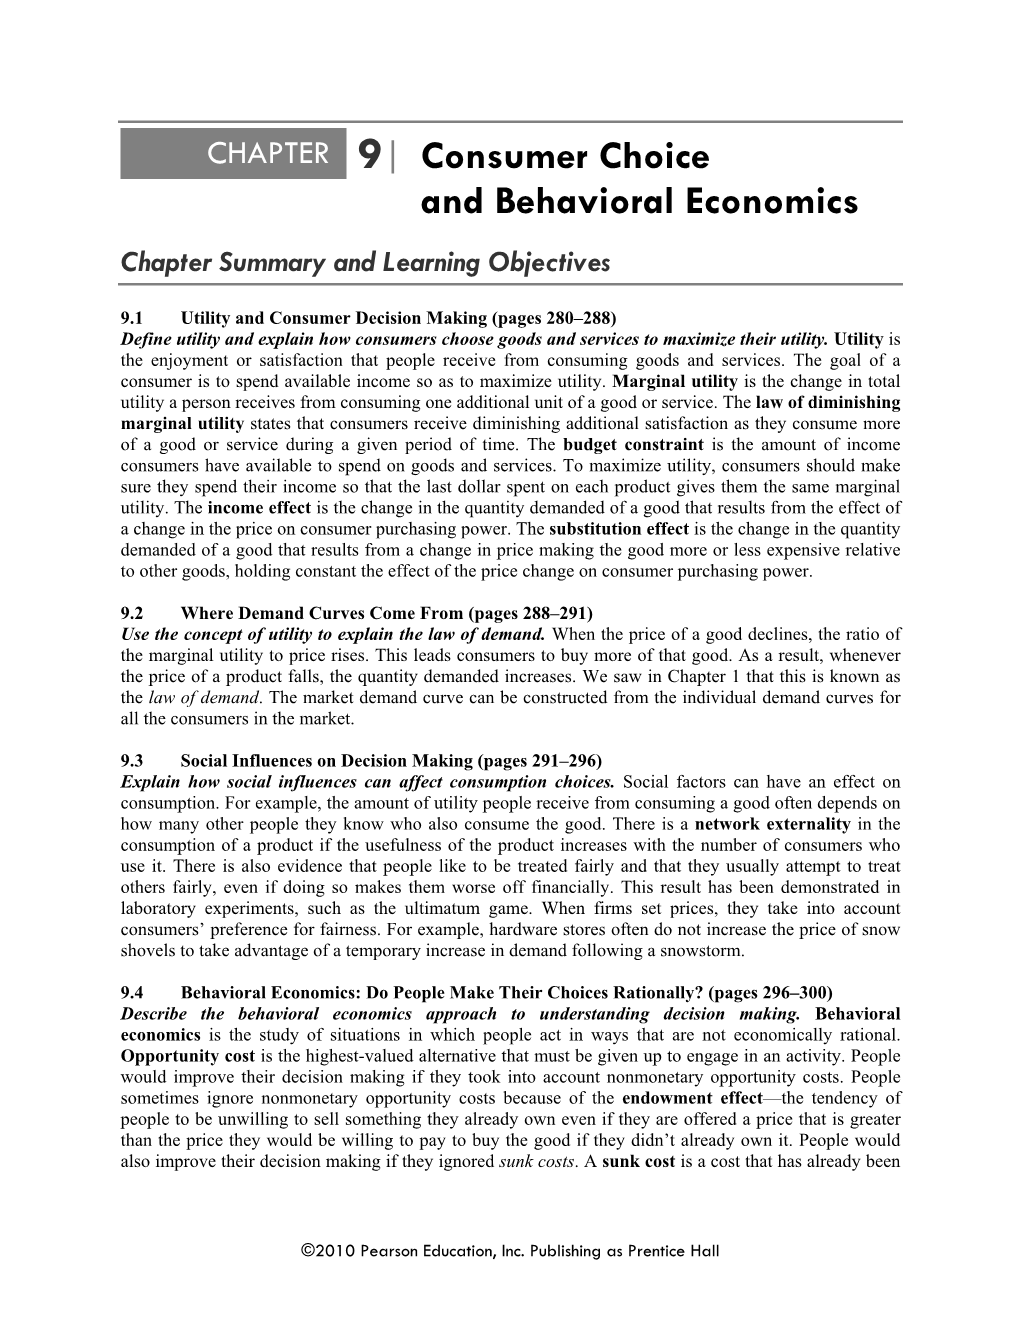 Consumer Choice and Behavioral Economics